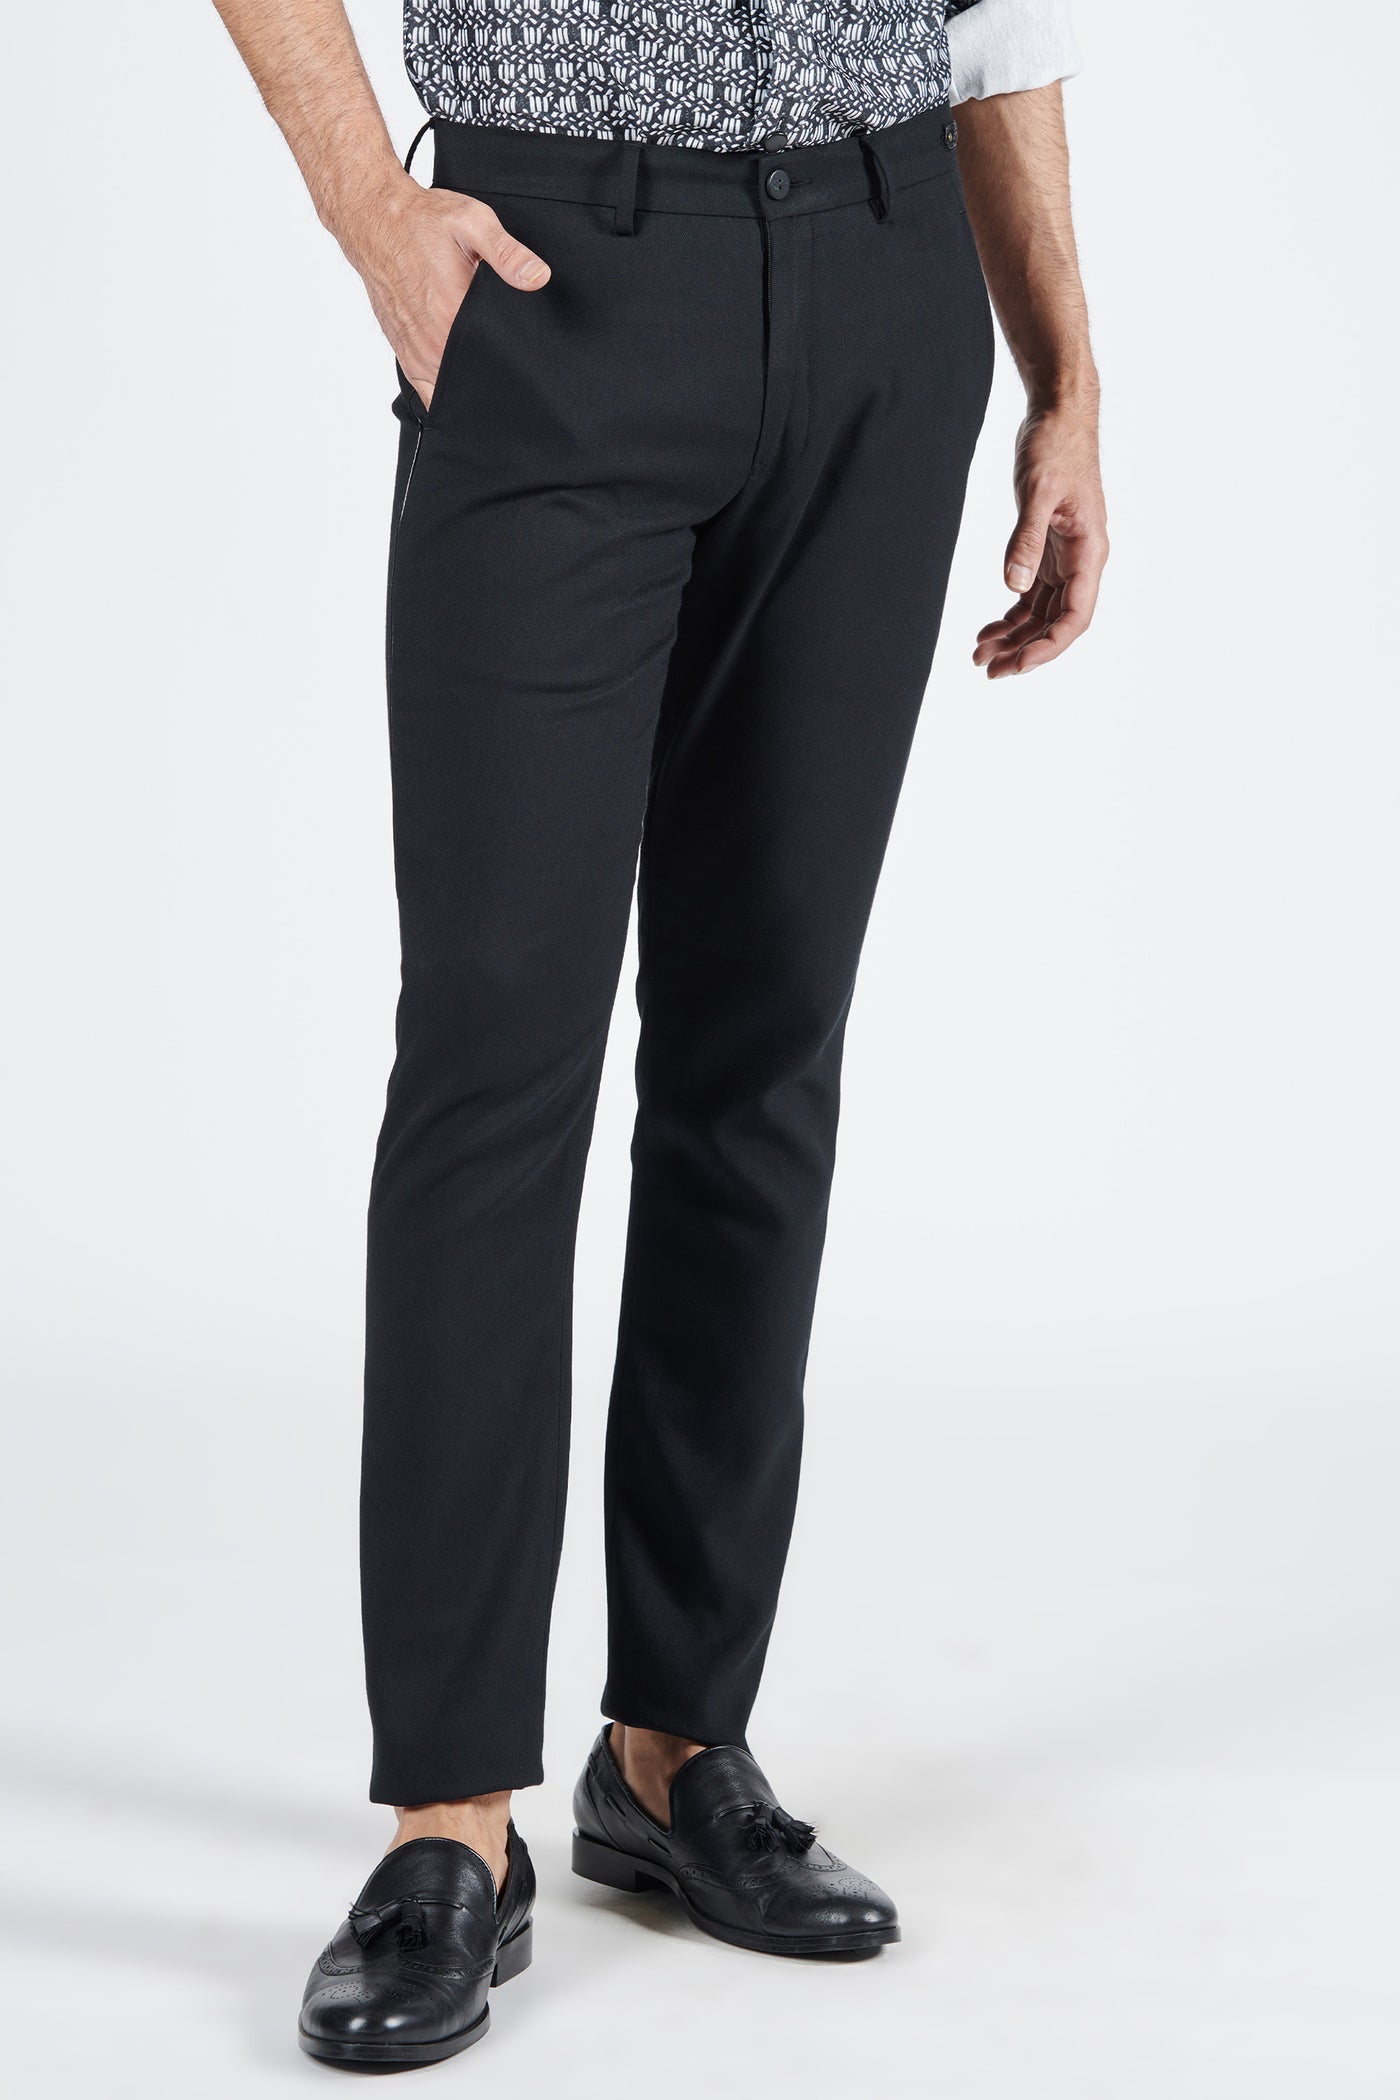 Shantanu & Nikhil Menswear Classic black Trouser with Faux Leather Braid Detailing indian designer wear online shopping melange singapore